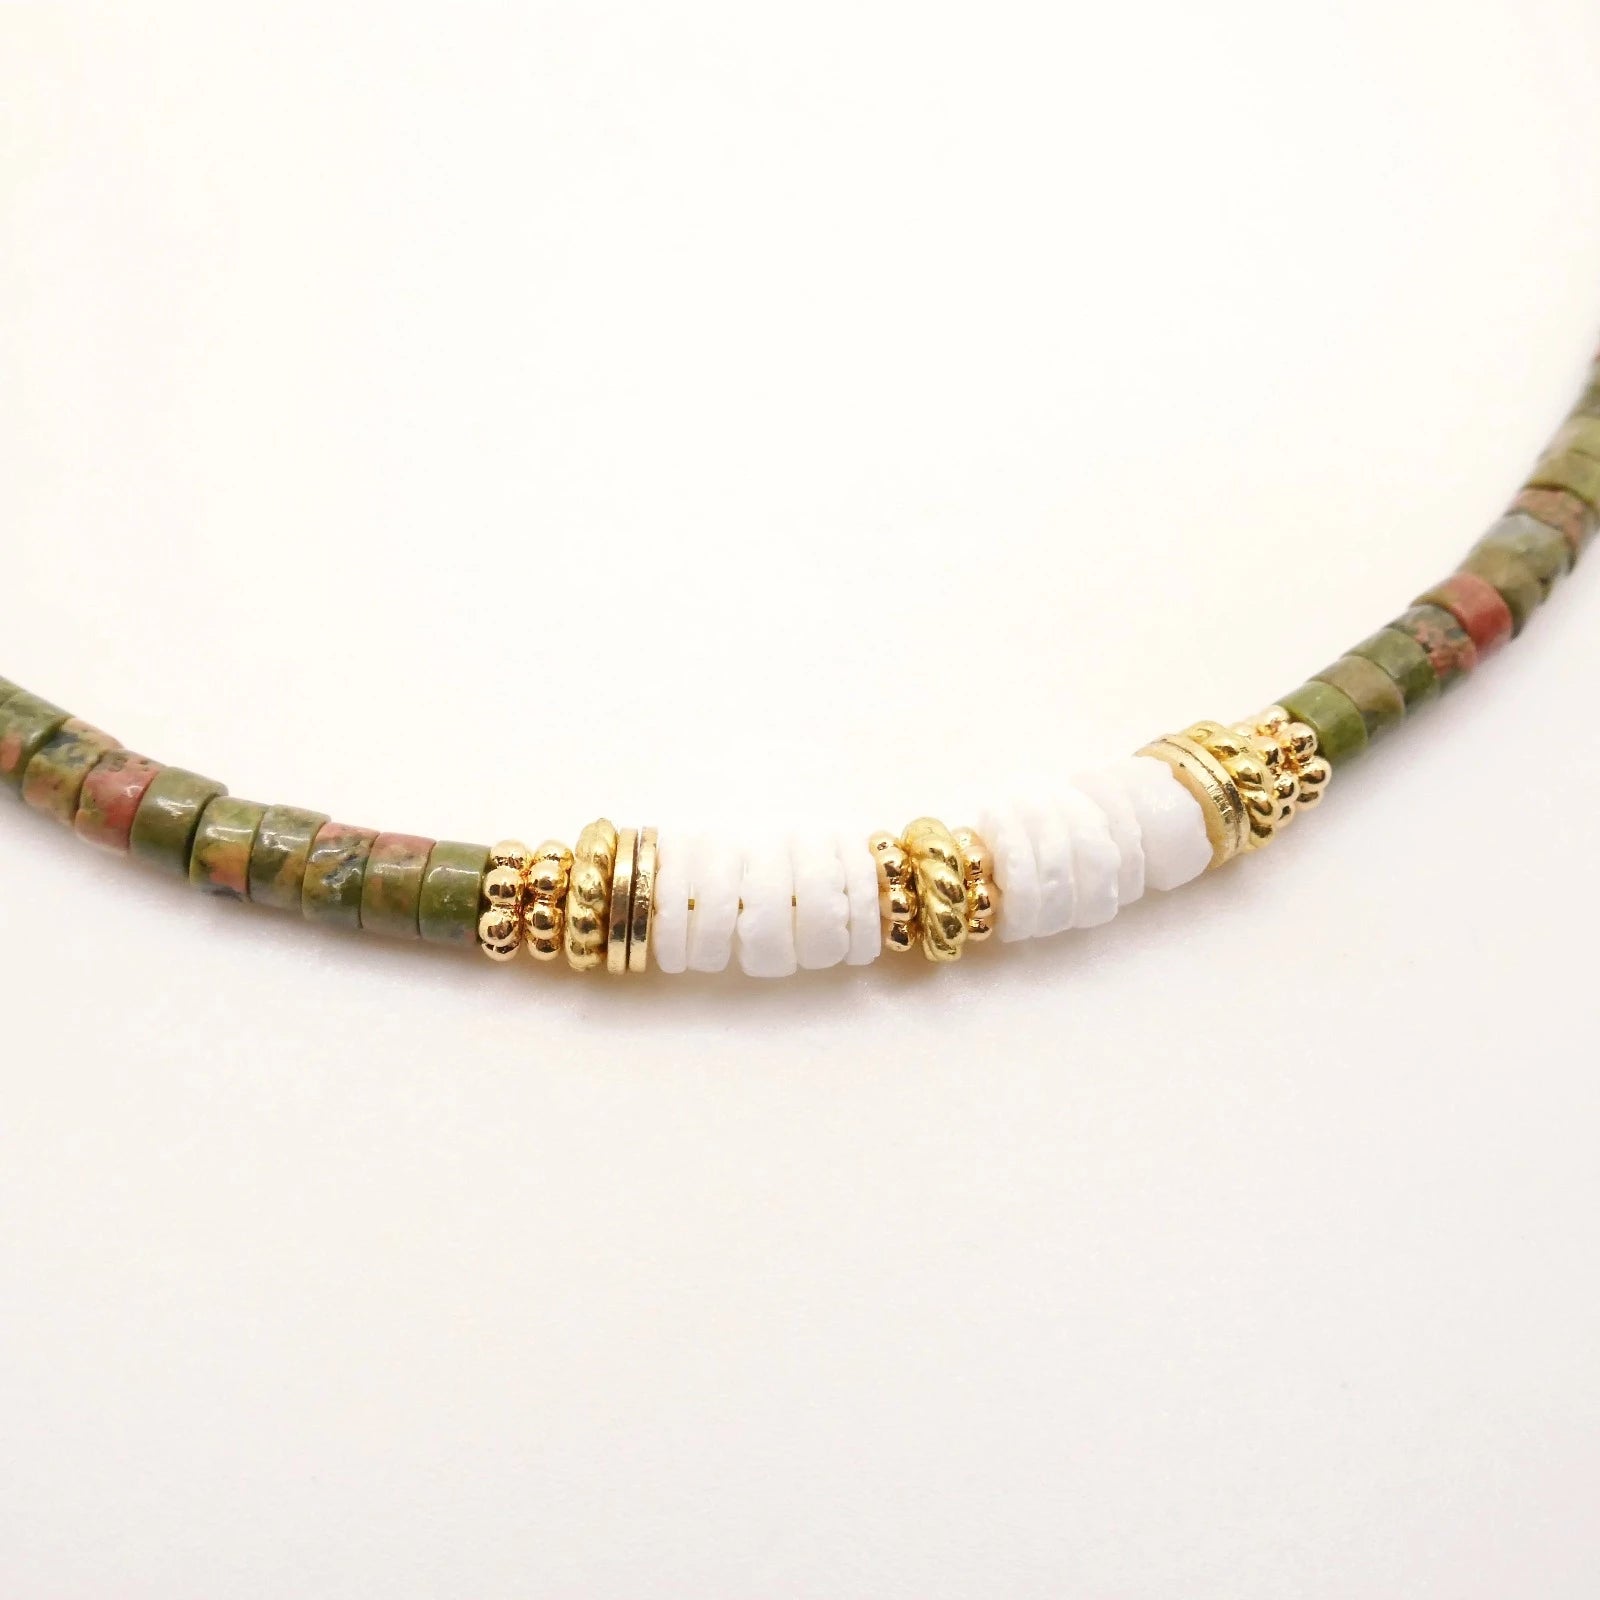 Collier femme vert kaki original avec perles dorées et perles Heishi blanches